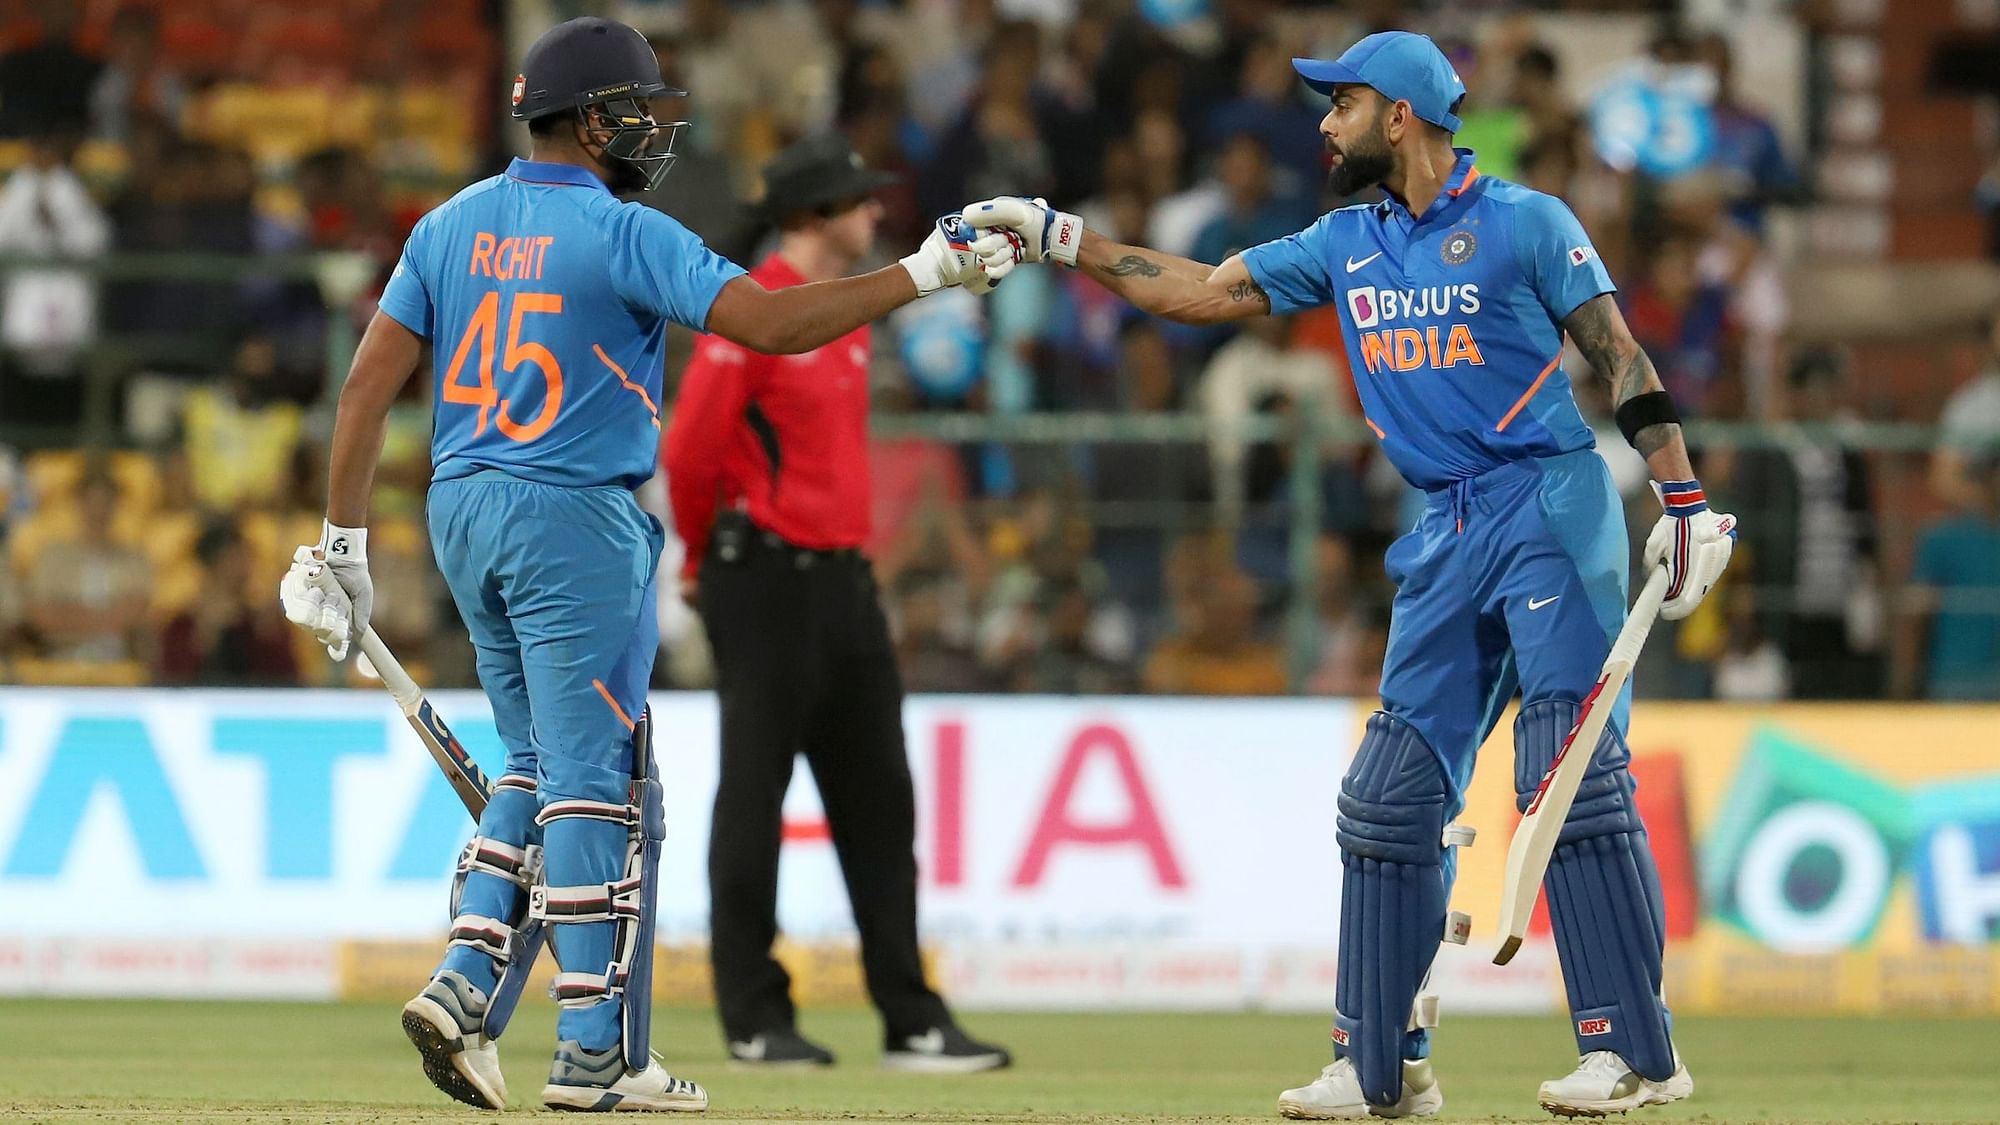 Both Rohit Sharma and Virat Kohli now have 8 centuries against Australia.